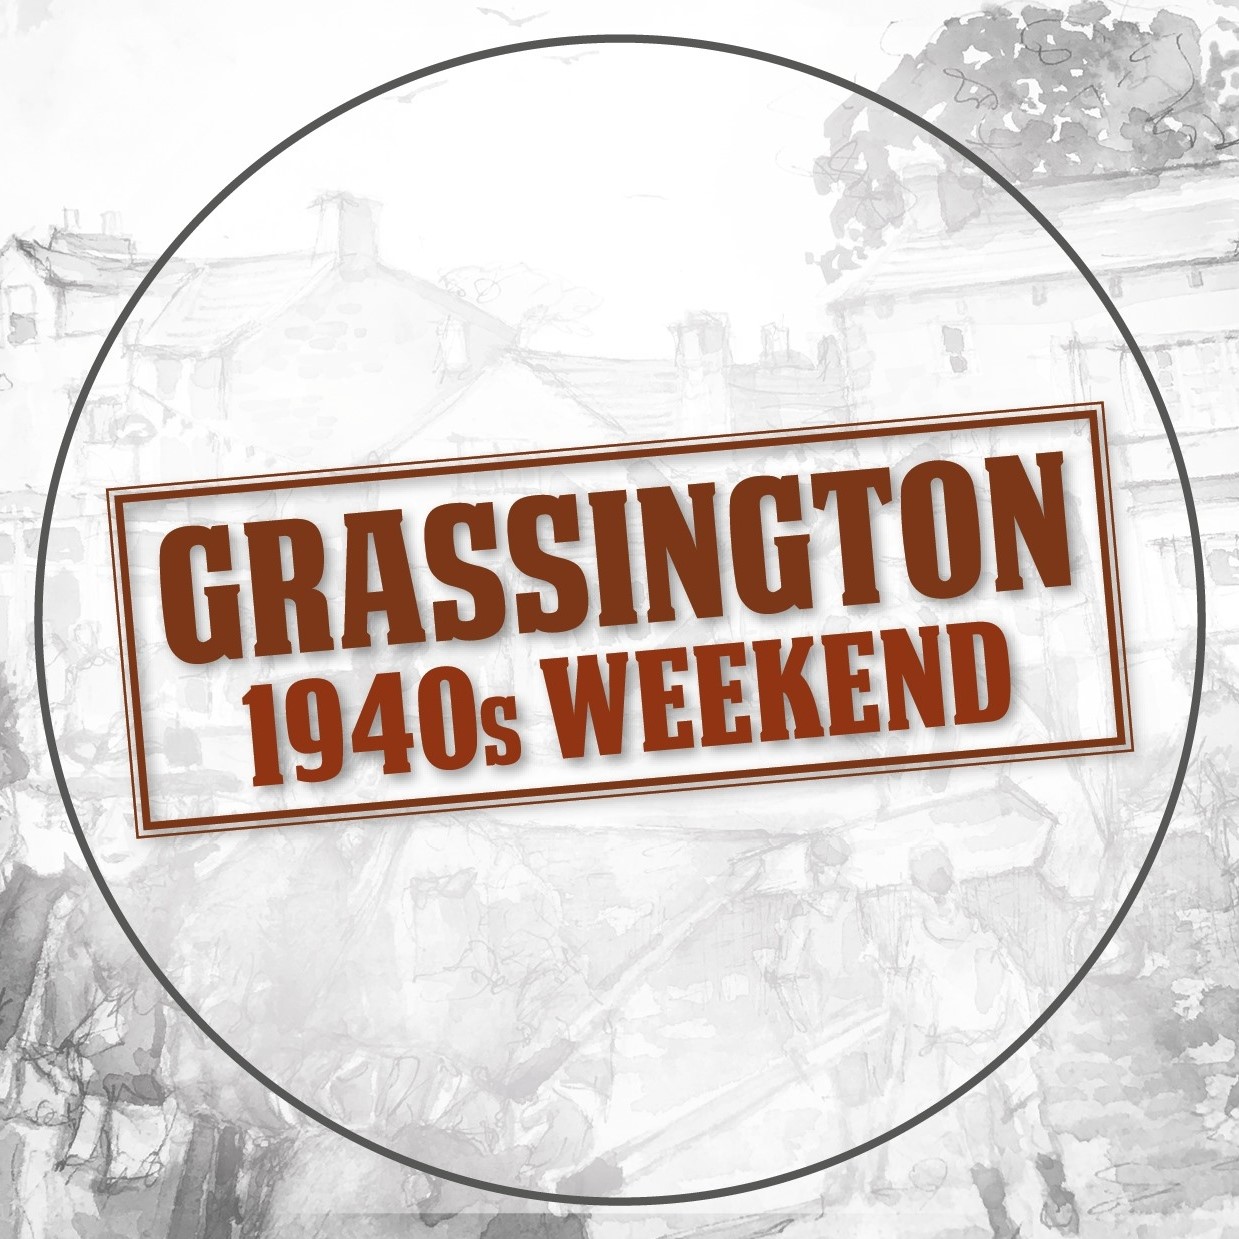 Grassington 1940s weekend